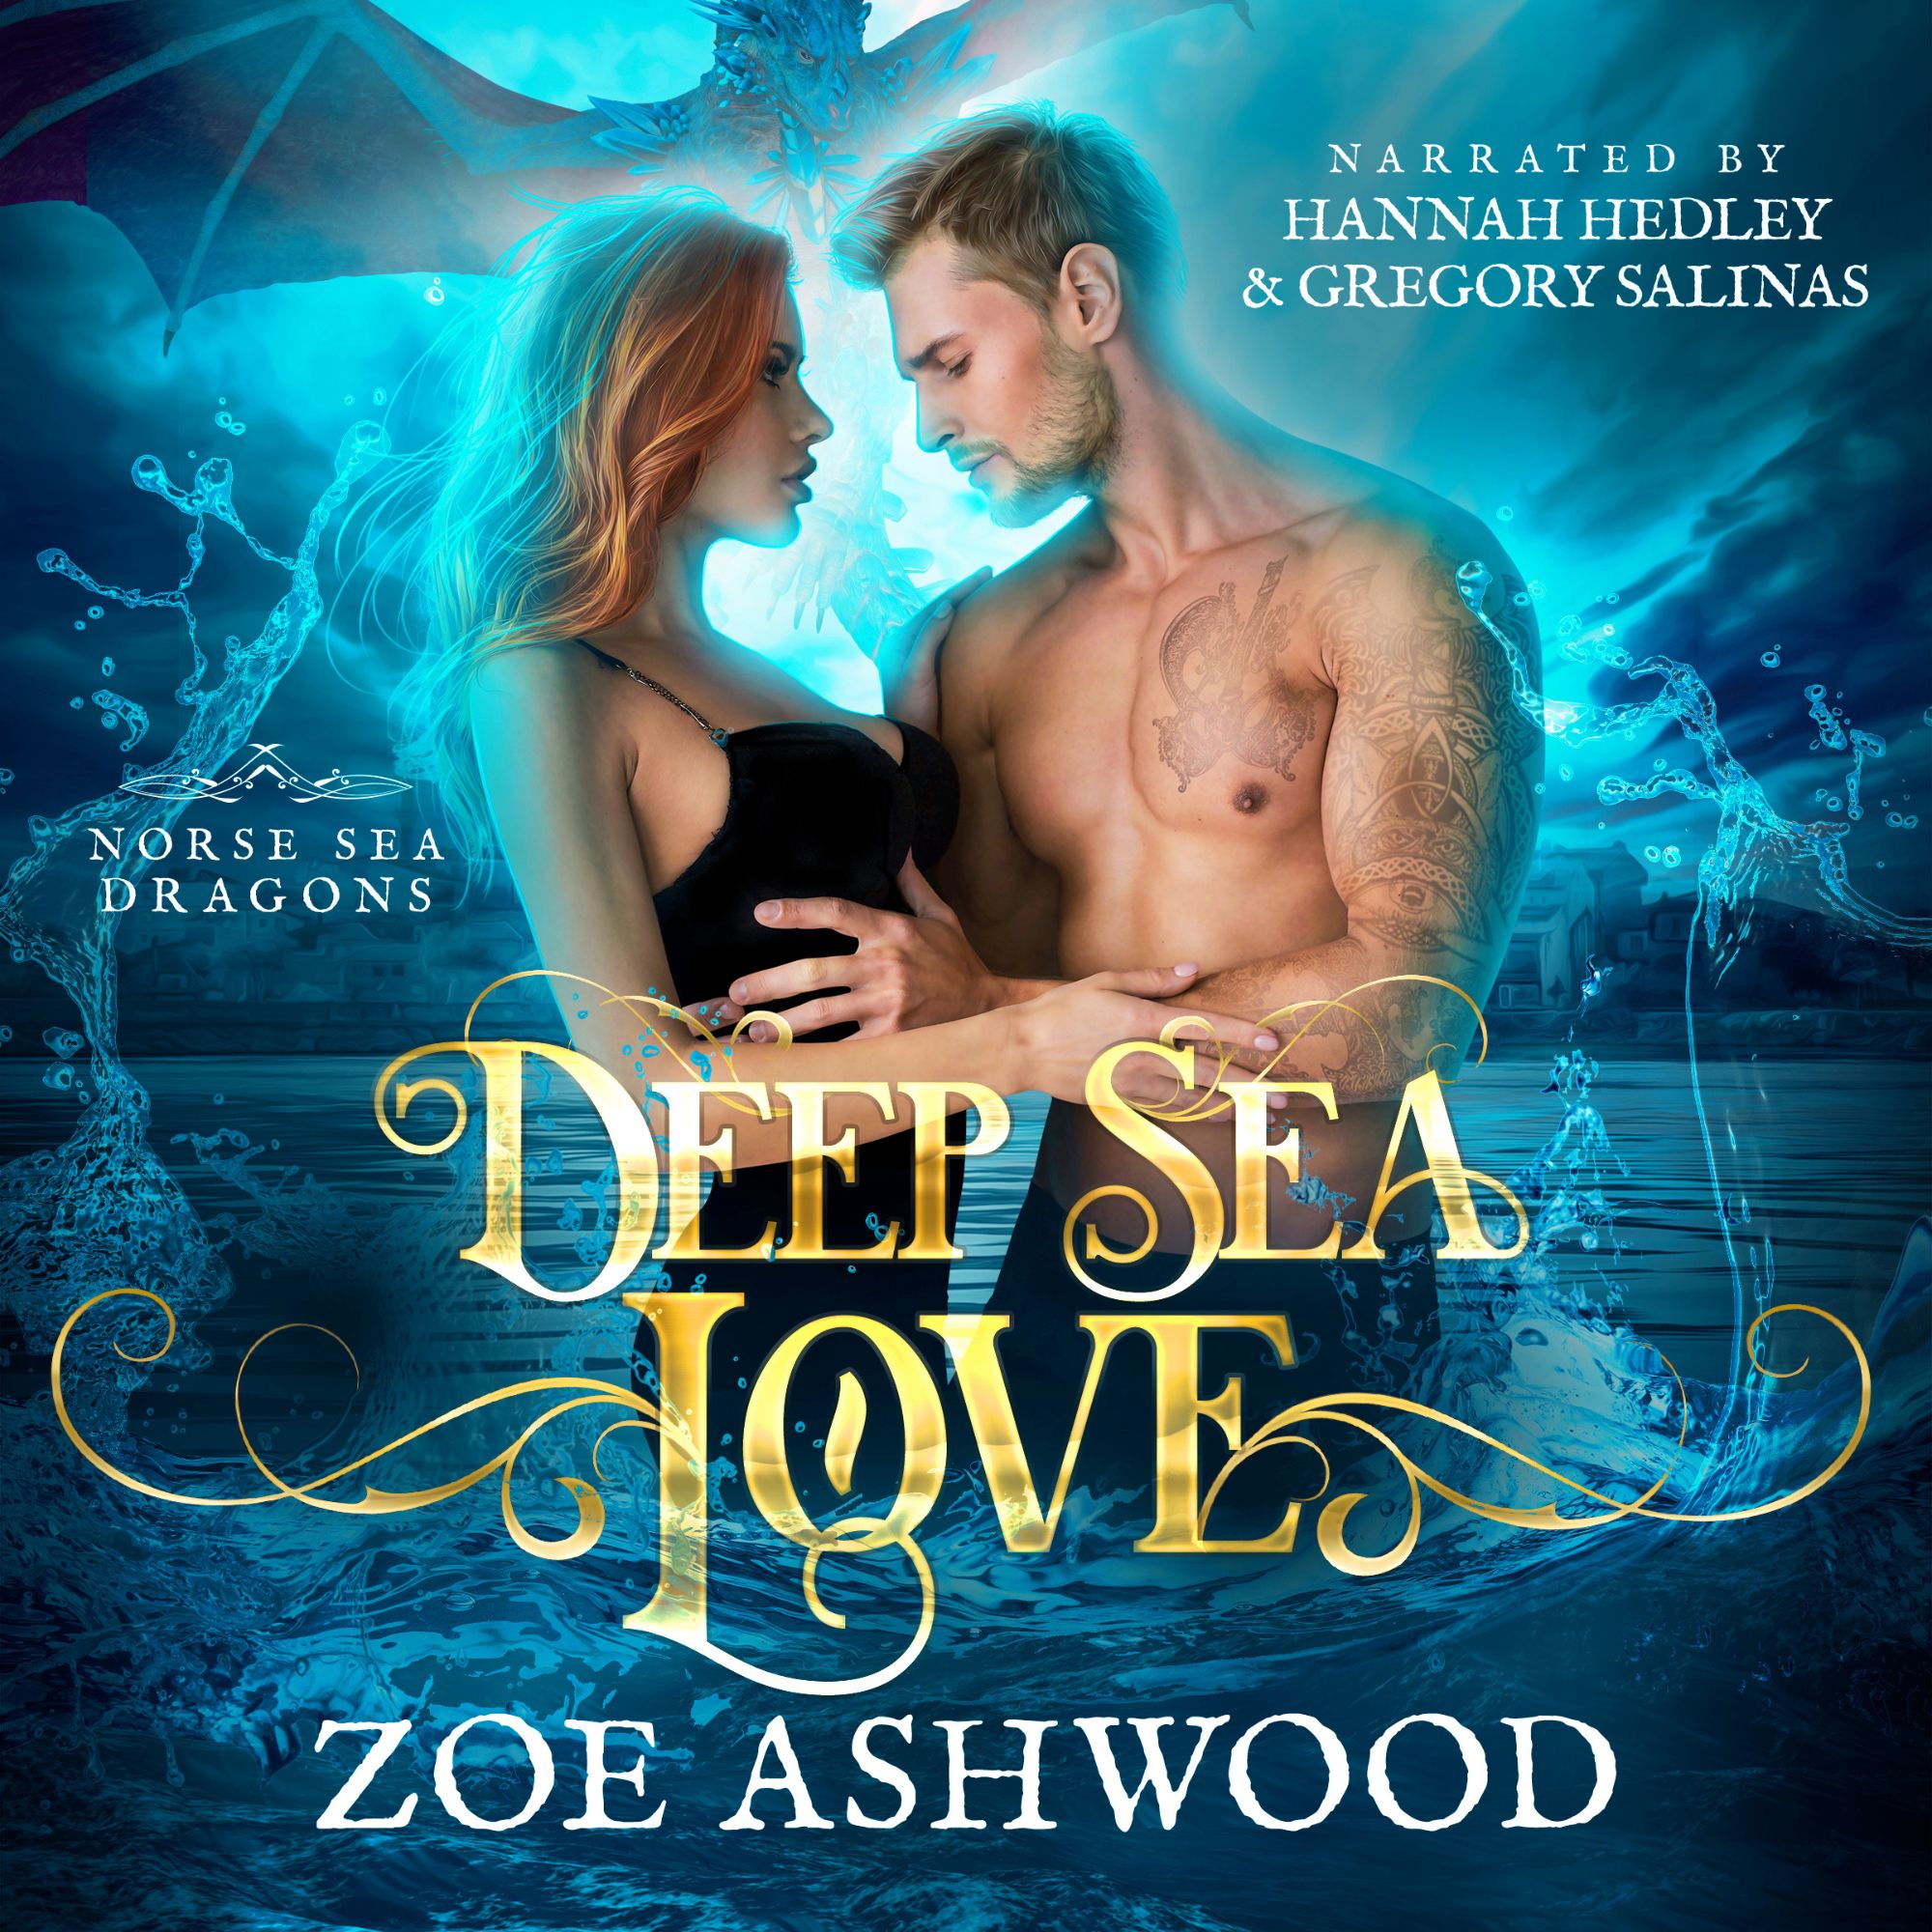 Deep Sea Love (Norse Sea Dragons #2) by Zoe Ashwood - a steamy paranormal romance